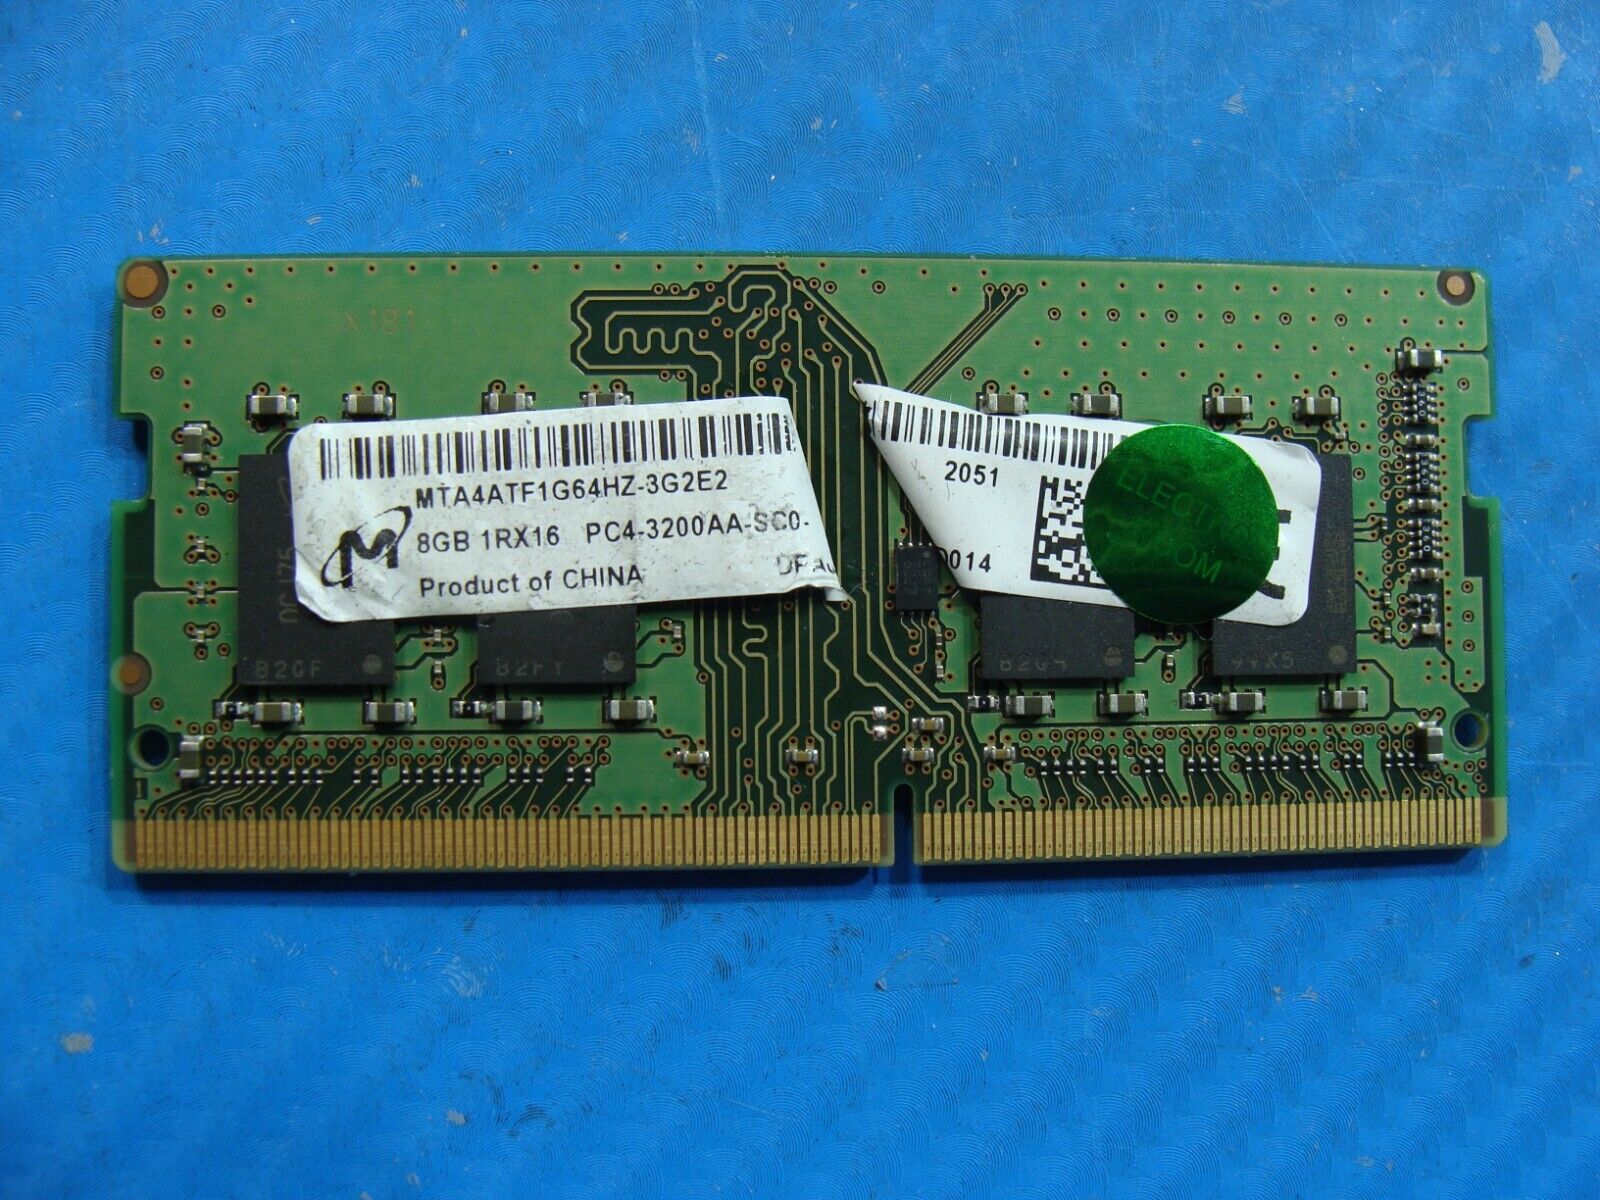 Asus G513QY-212.SG15 Micron 8GB 1Rx16 PC4-3200AA Memory RAM MTA4ATF1G64HZ-3G2E2